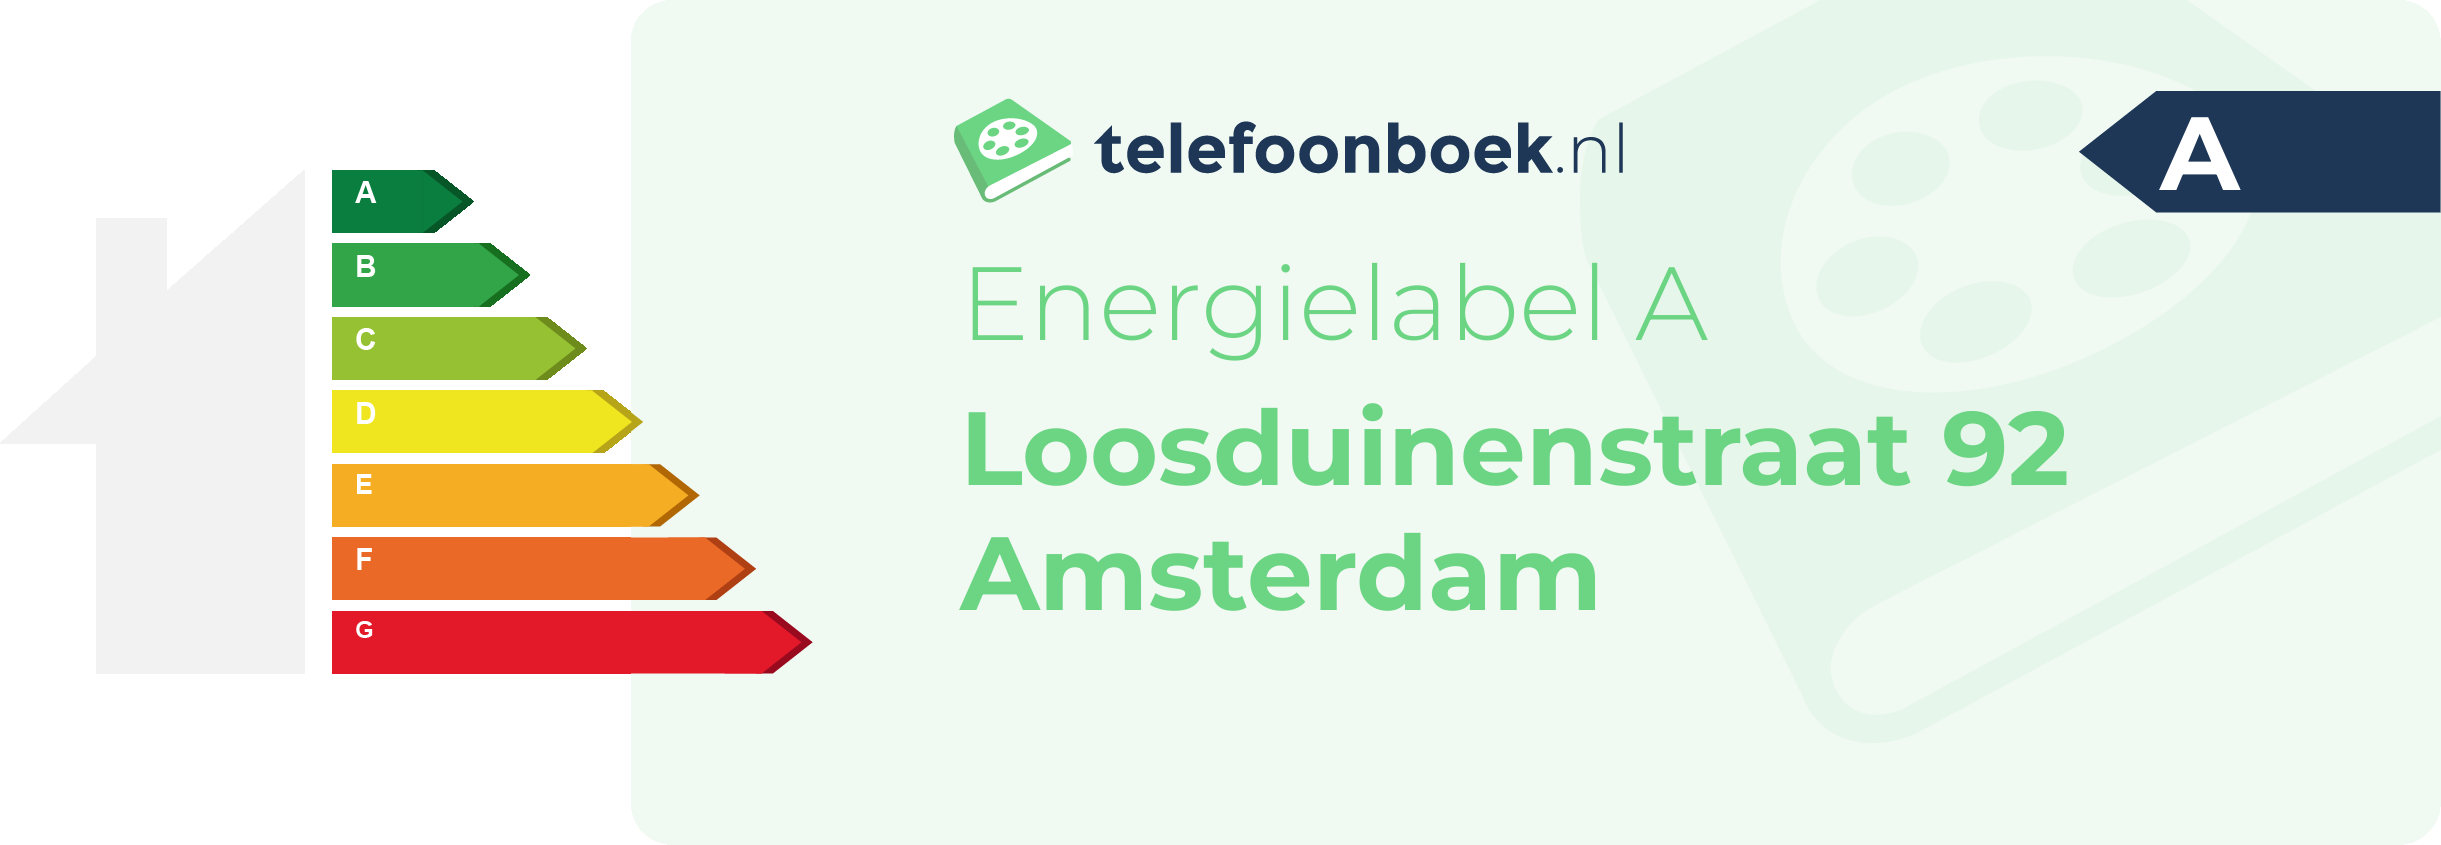 Energielabel Loosduinenstraat 92 Amsterdam